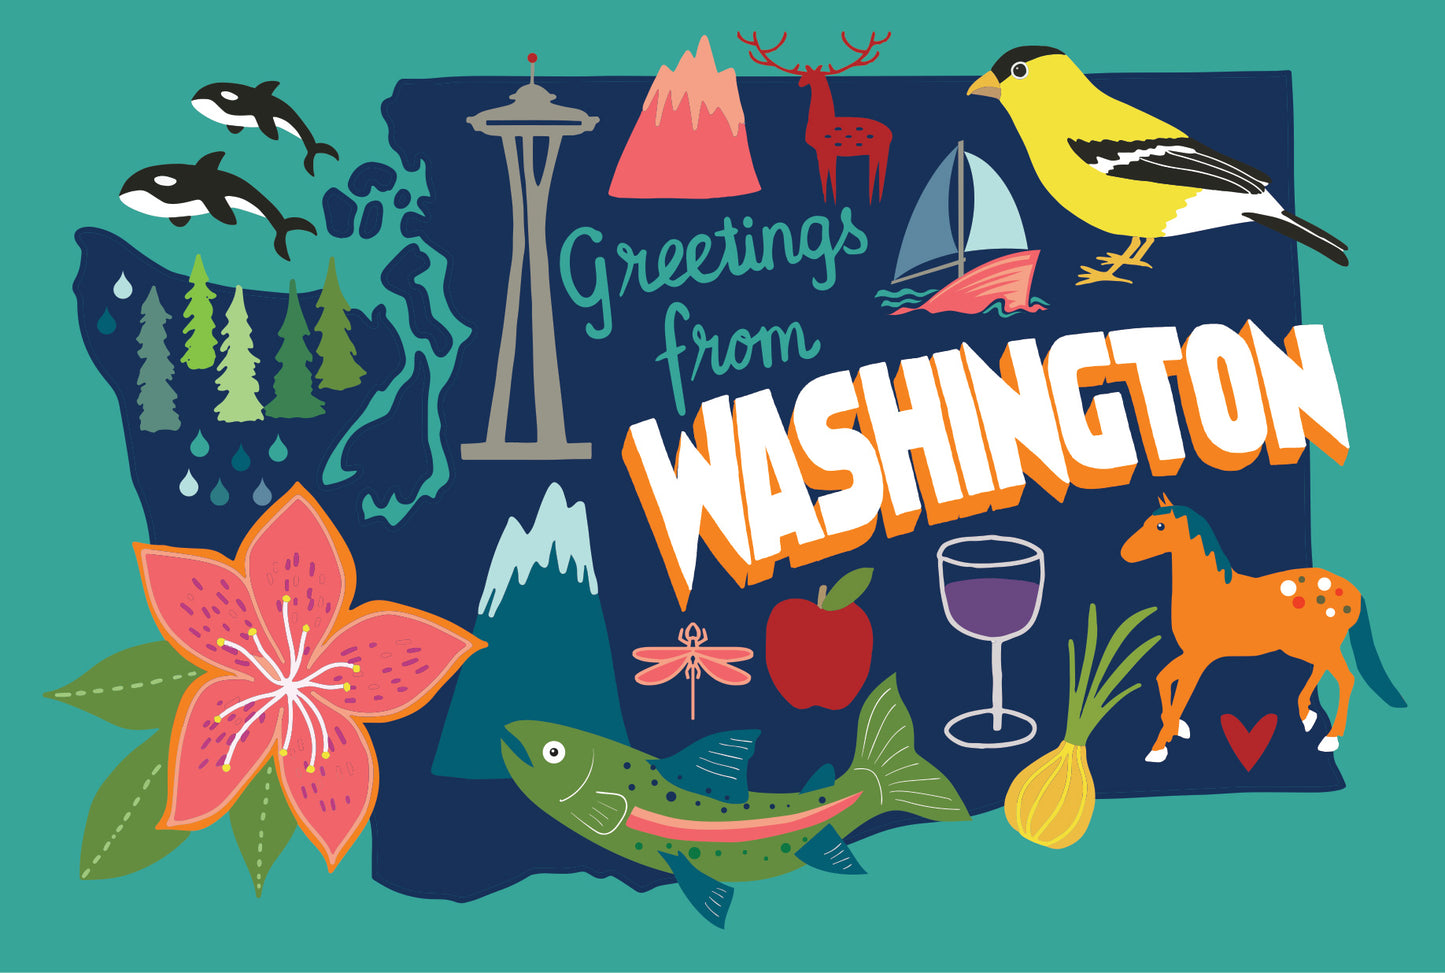 Greeting from Washington -  postcard